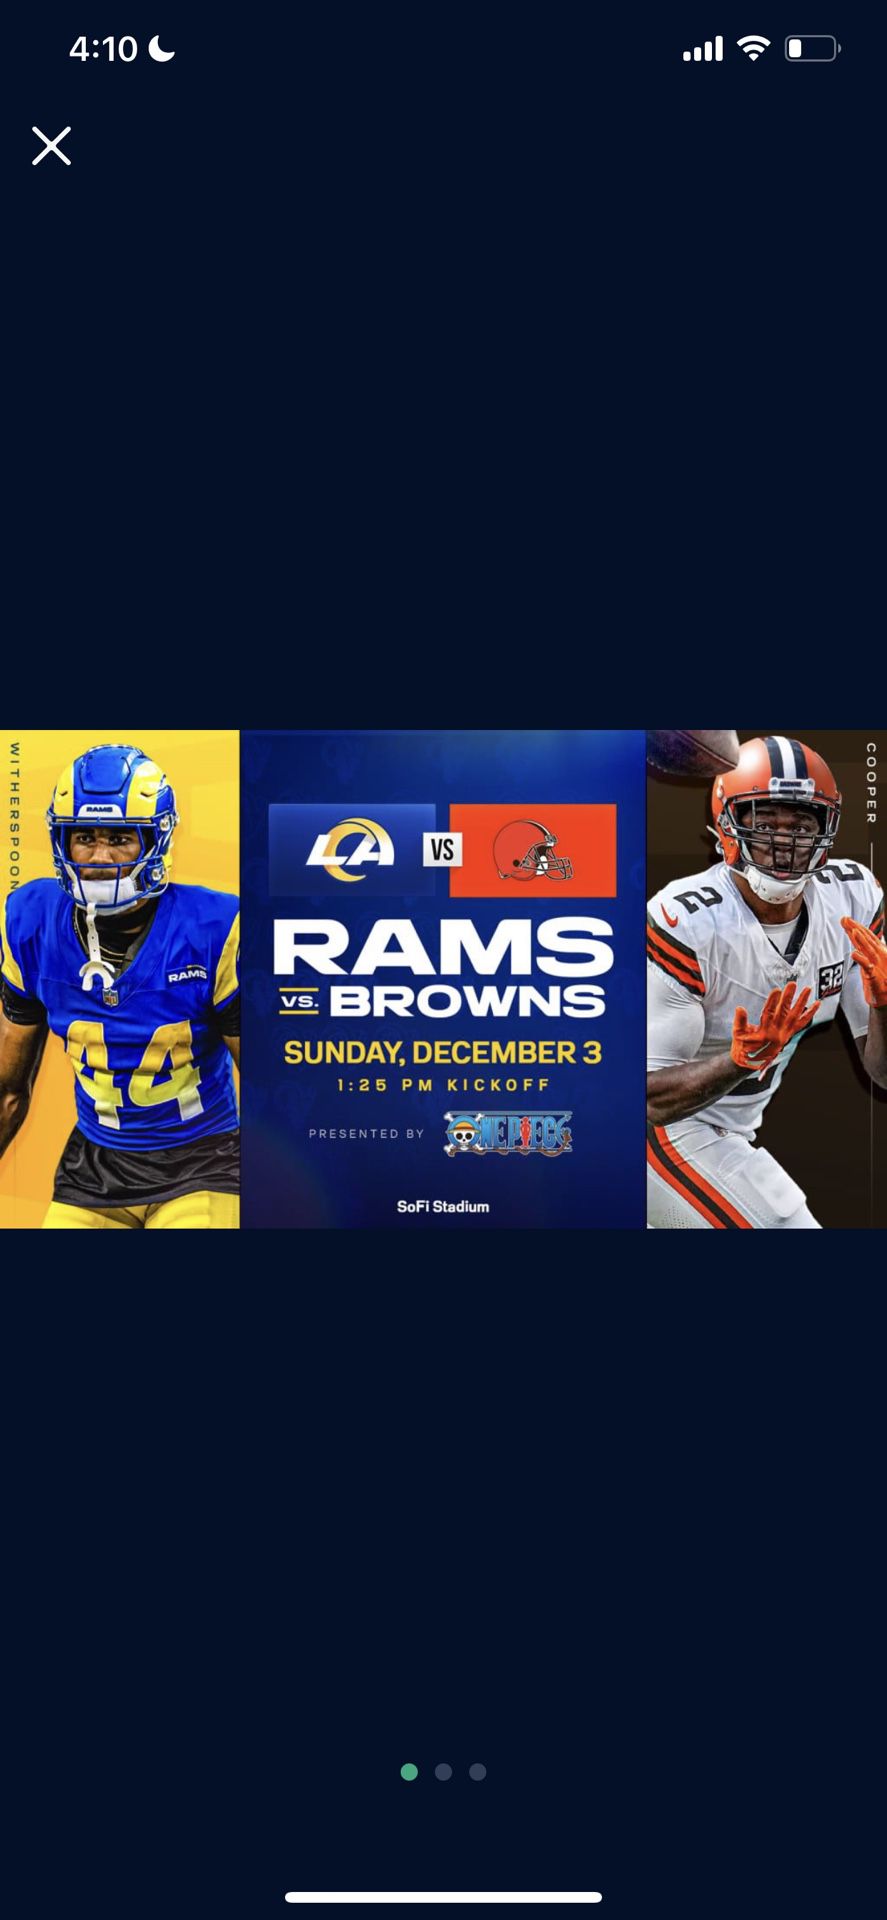 LA Rams vs Browns $30 EACH